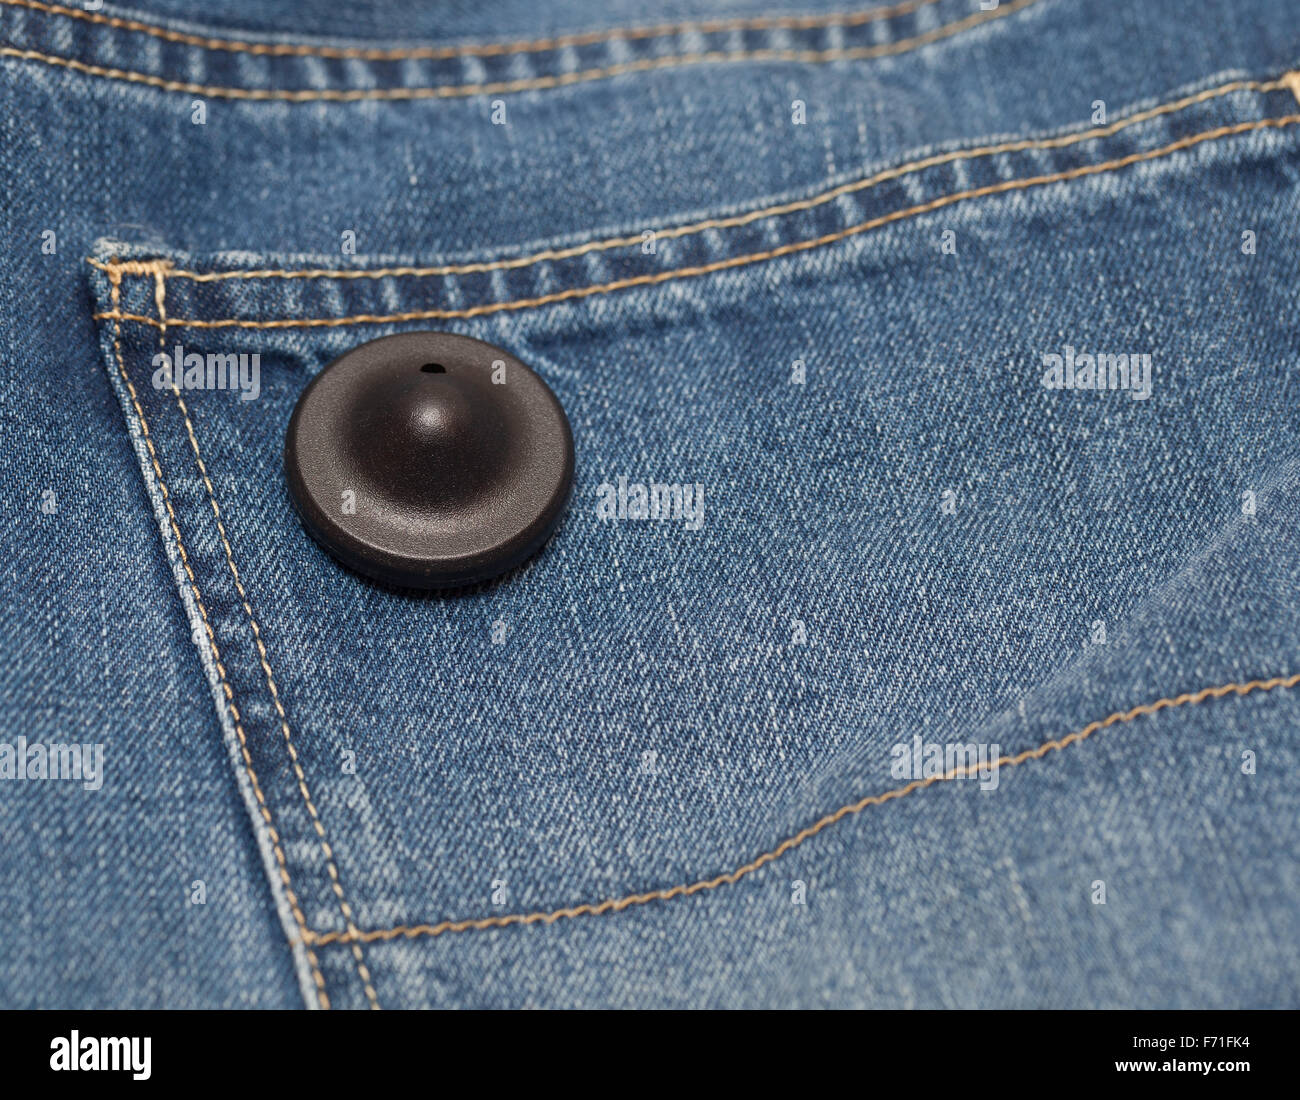 Black round clothing security tag Stock Photo - Alamy